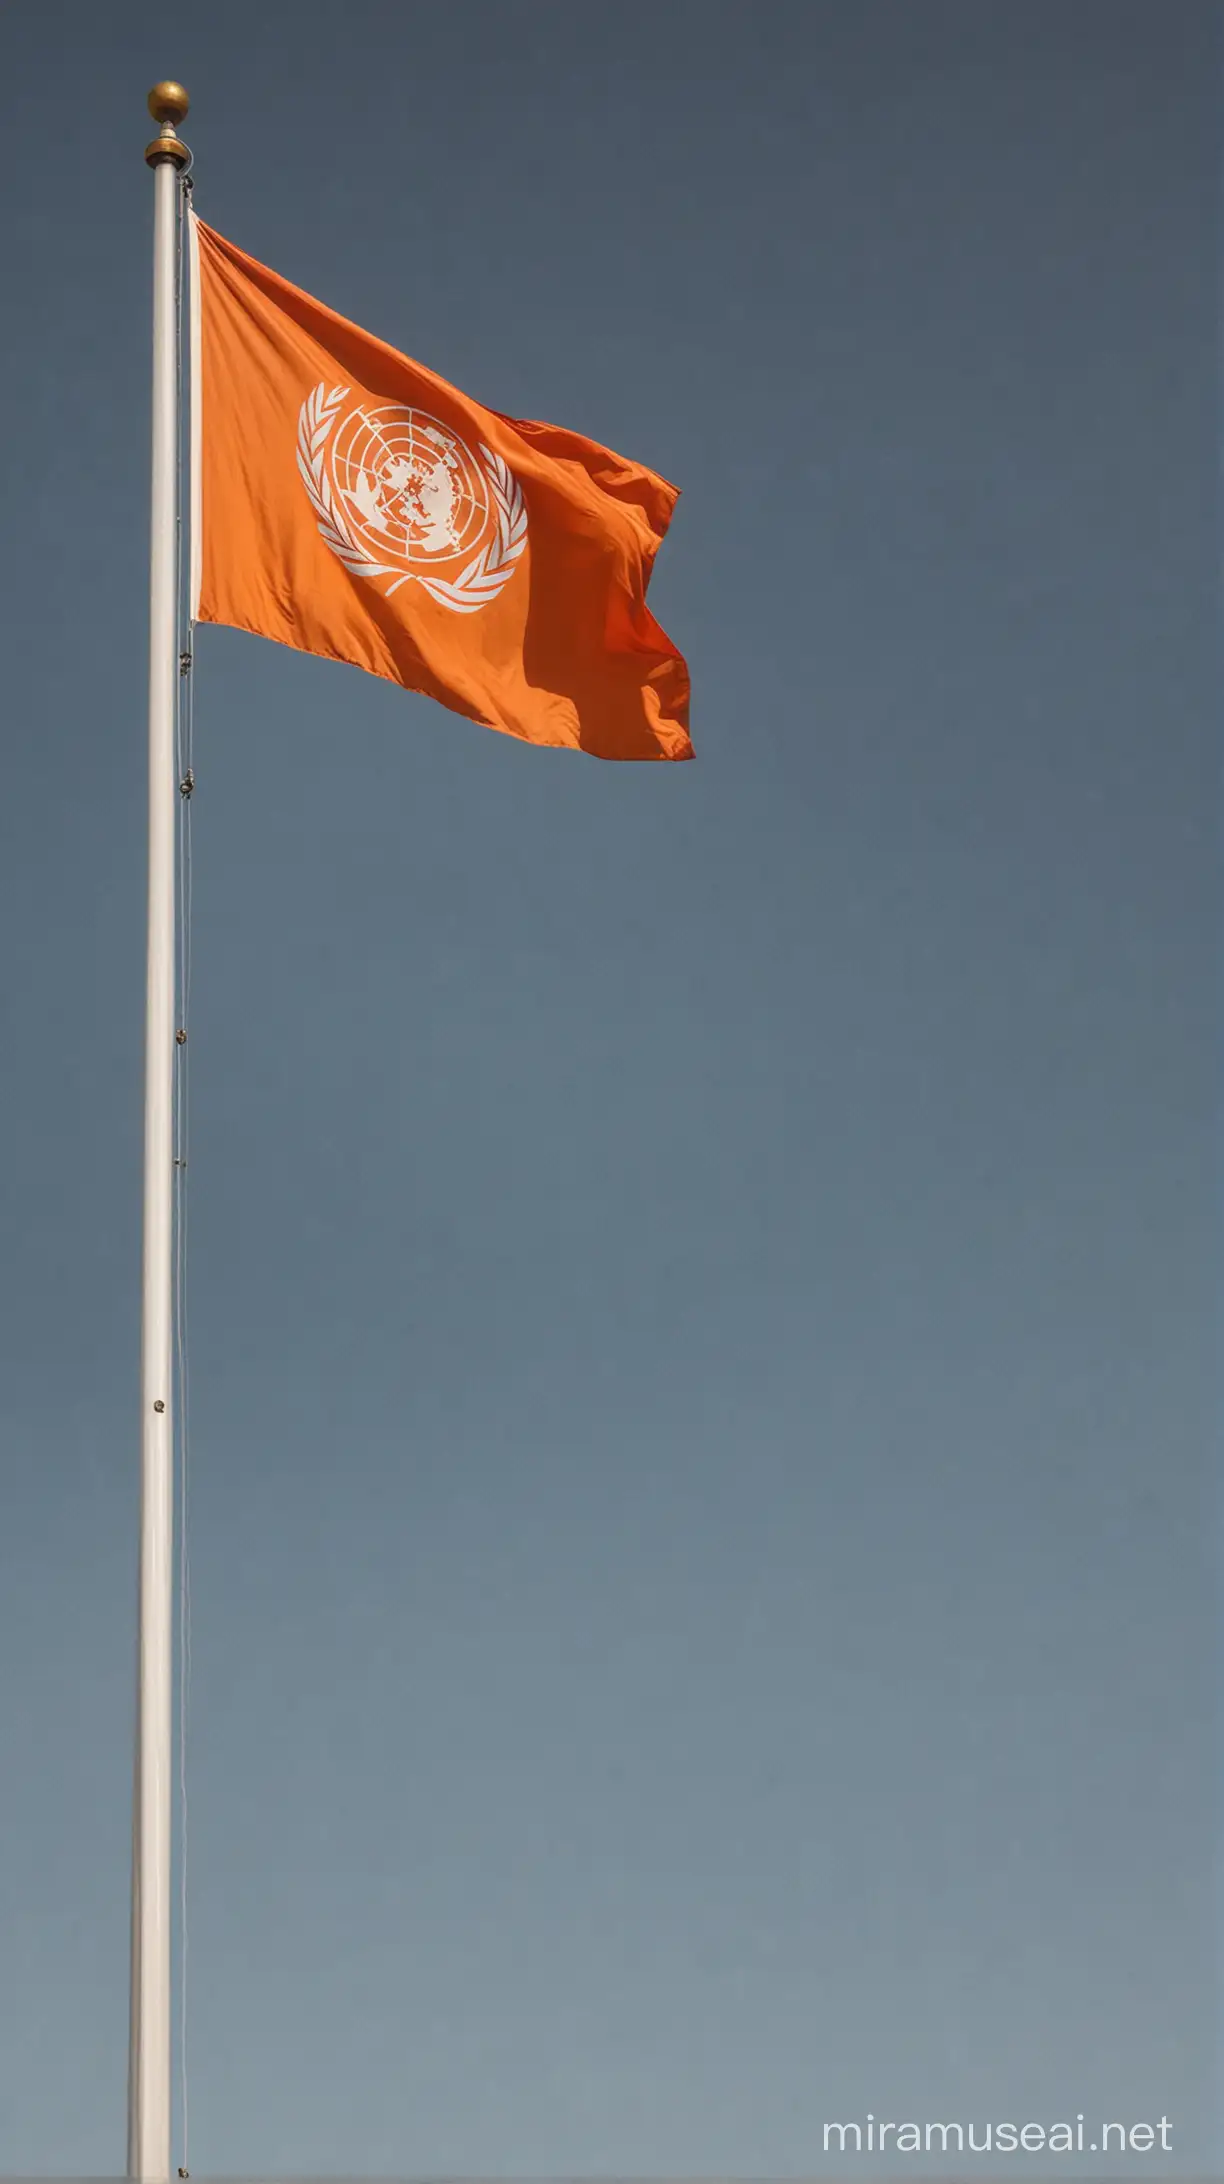 United Nations flag, but orange